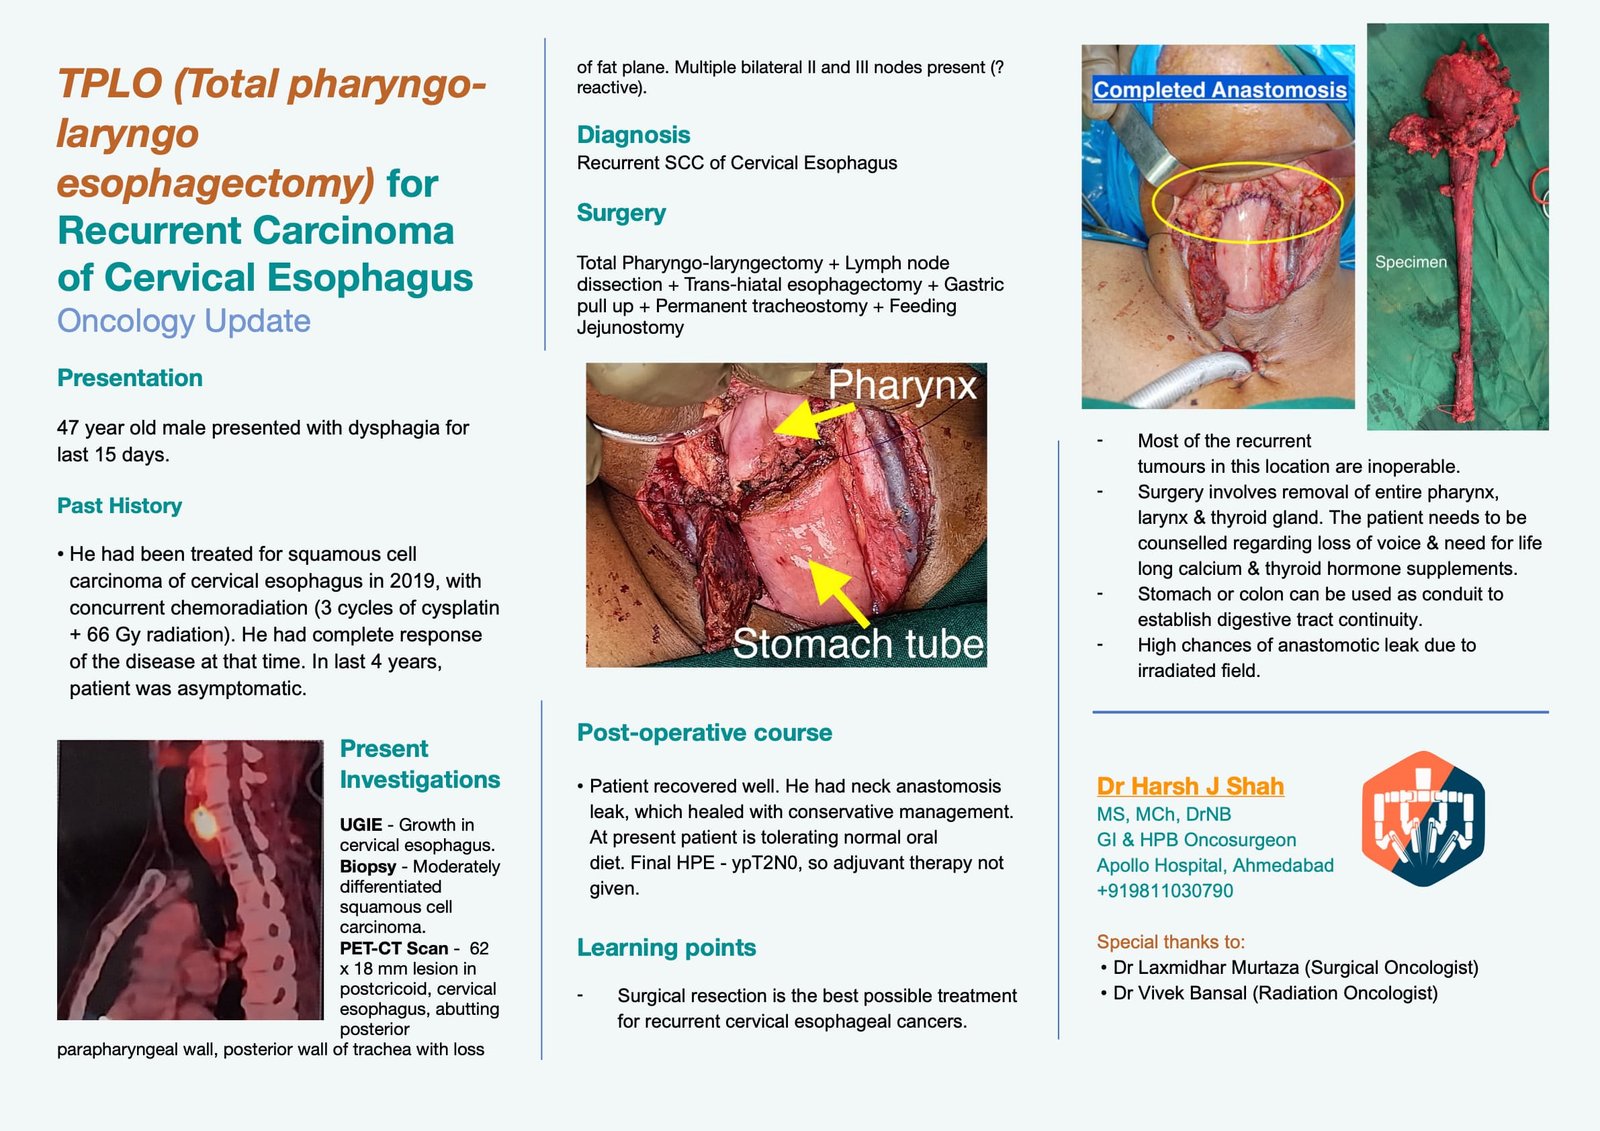 TPLO Total pharyngo laryngo esophagectomy for Recurrent Carcinoma of Cervical Esophagus